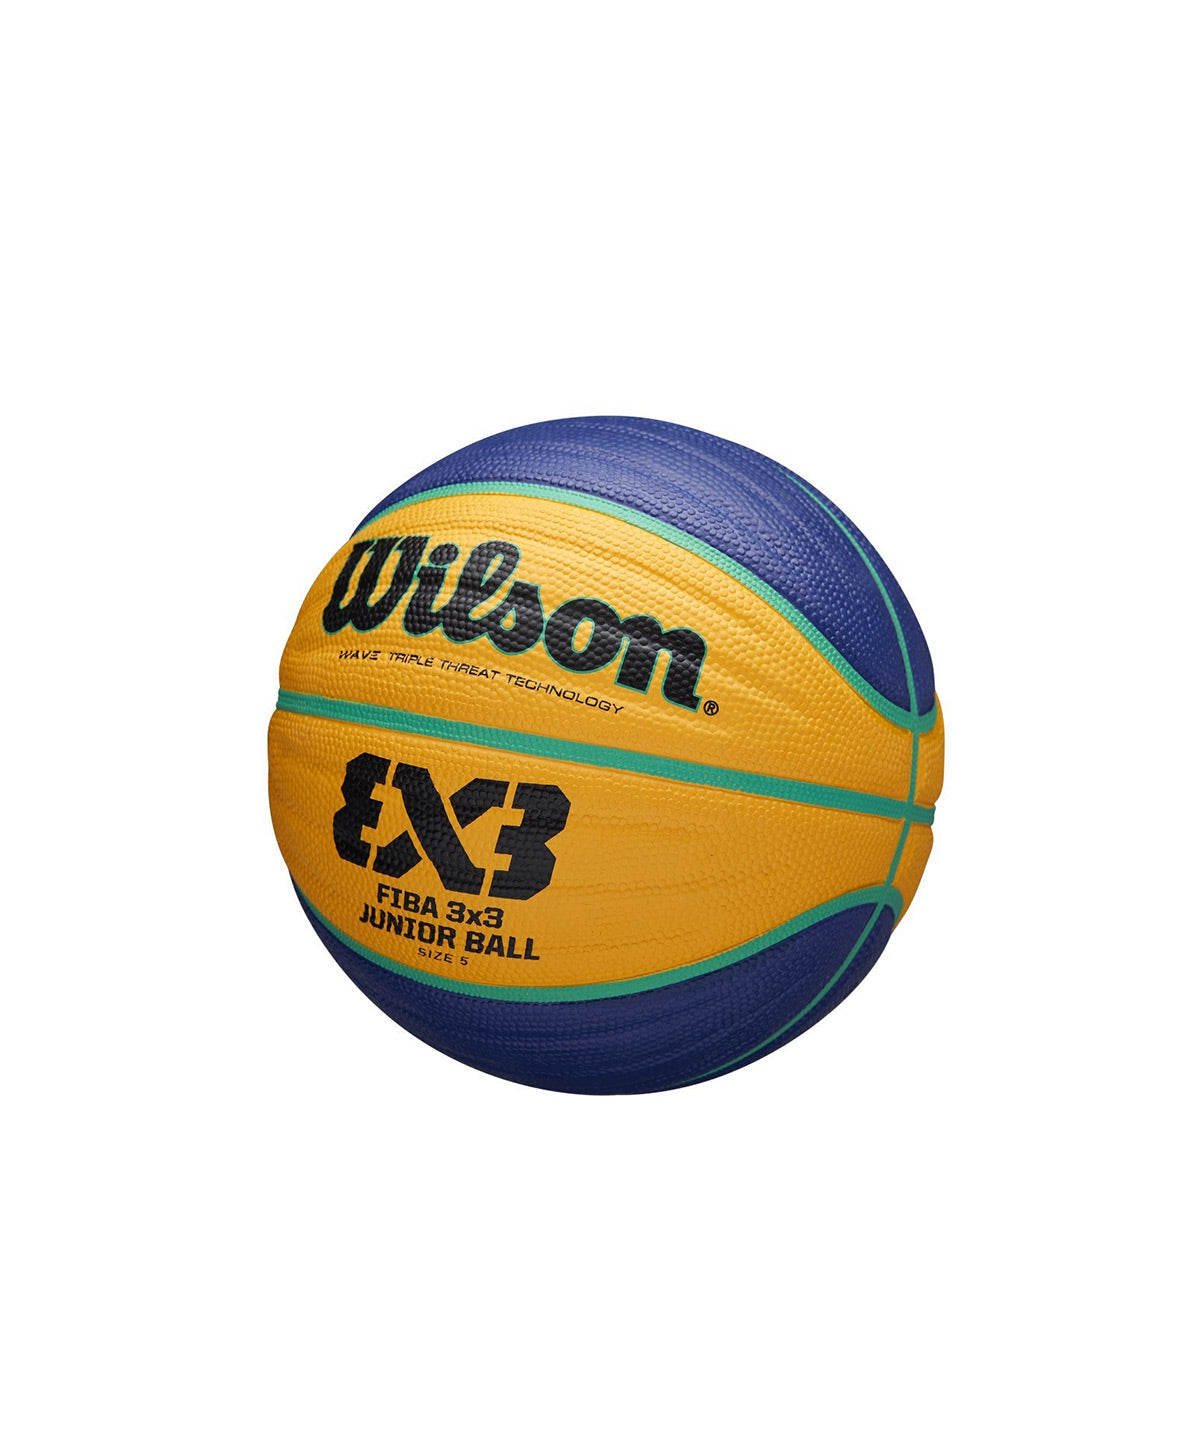 FIBA 3x3 Junior